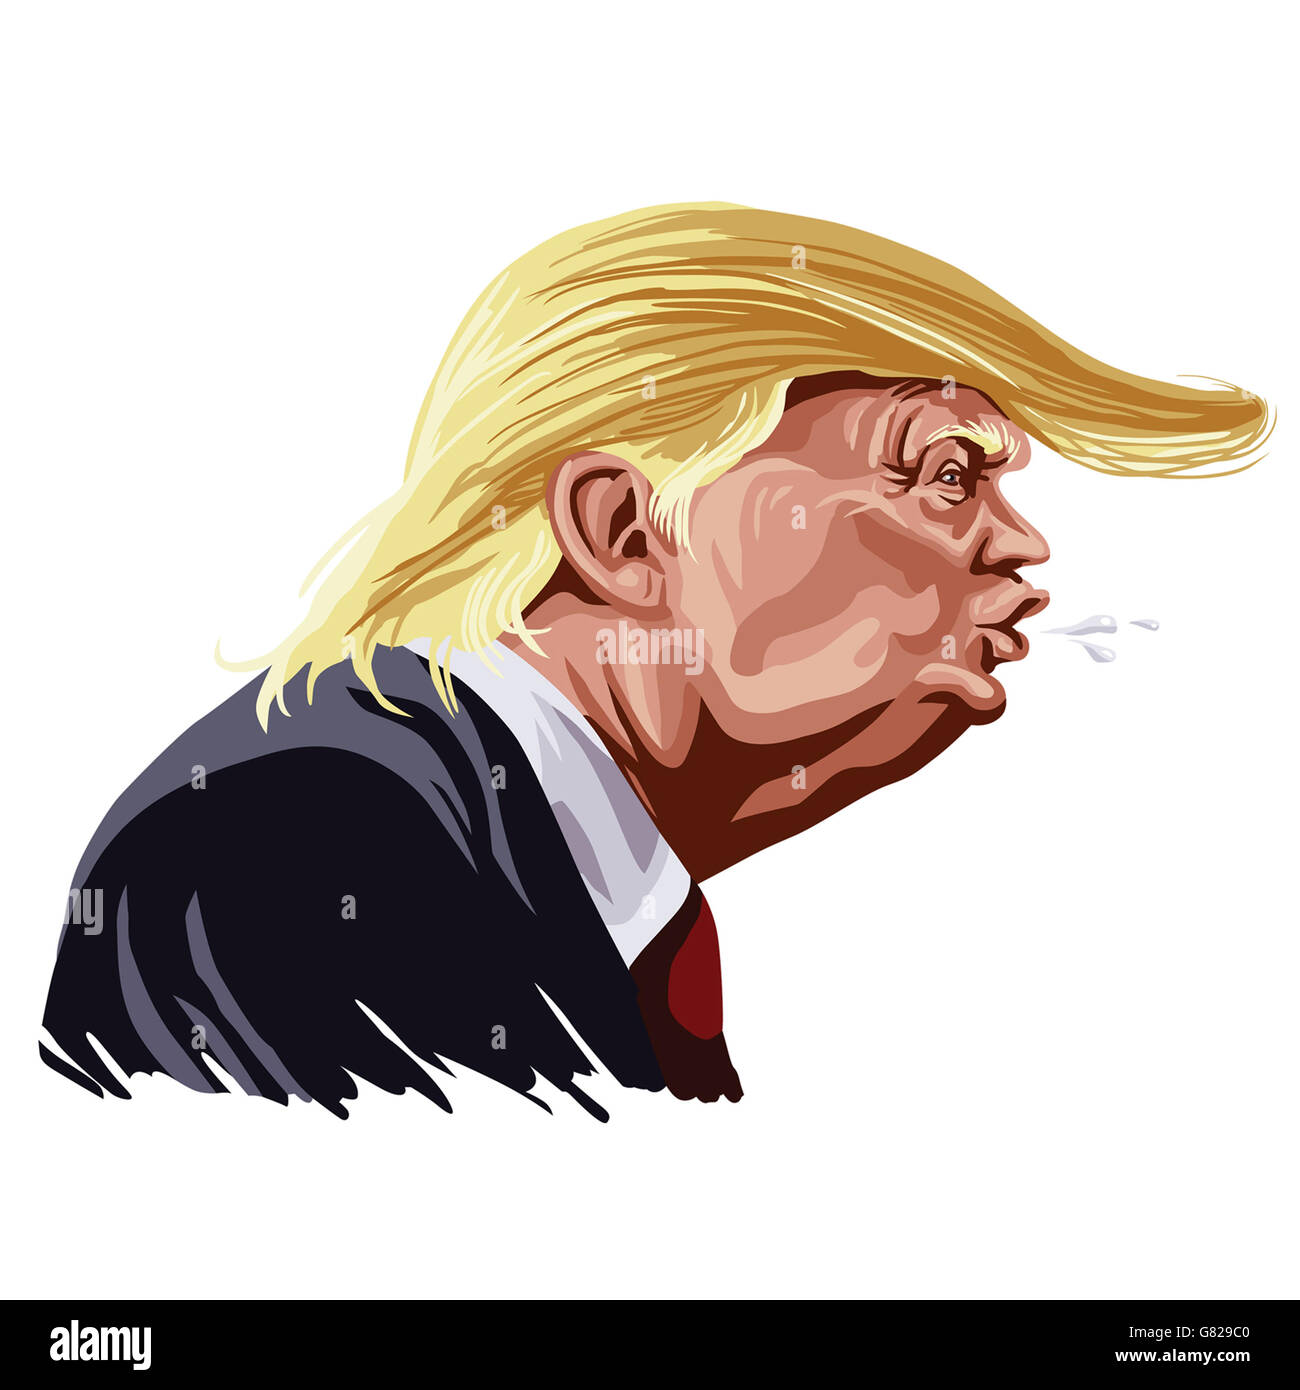 Donal Trump Cartoon Caricature Vector Illustration Stock Photo